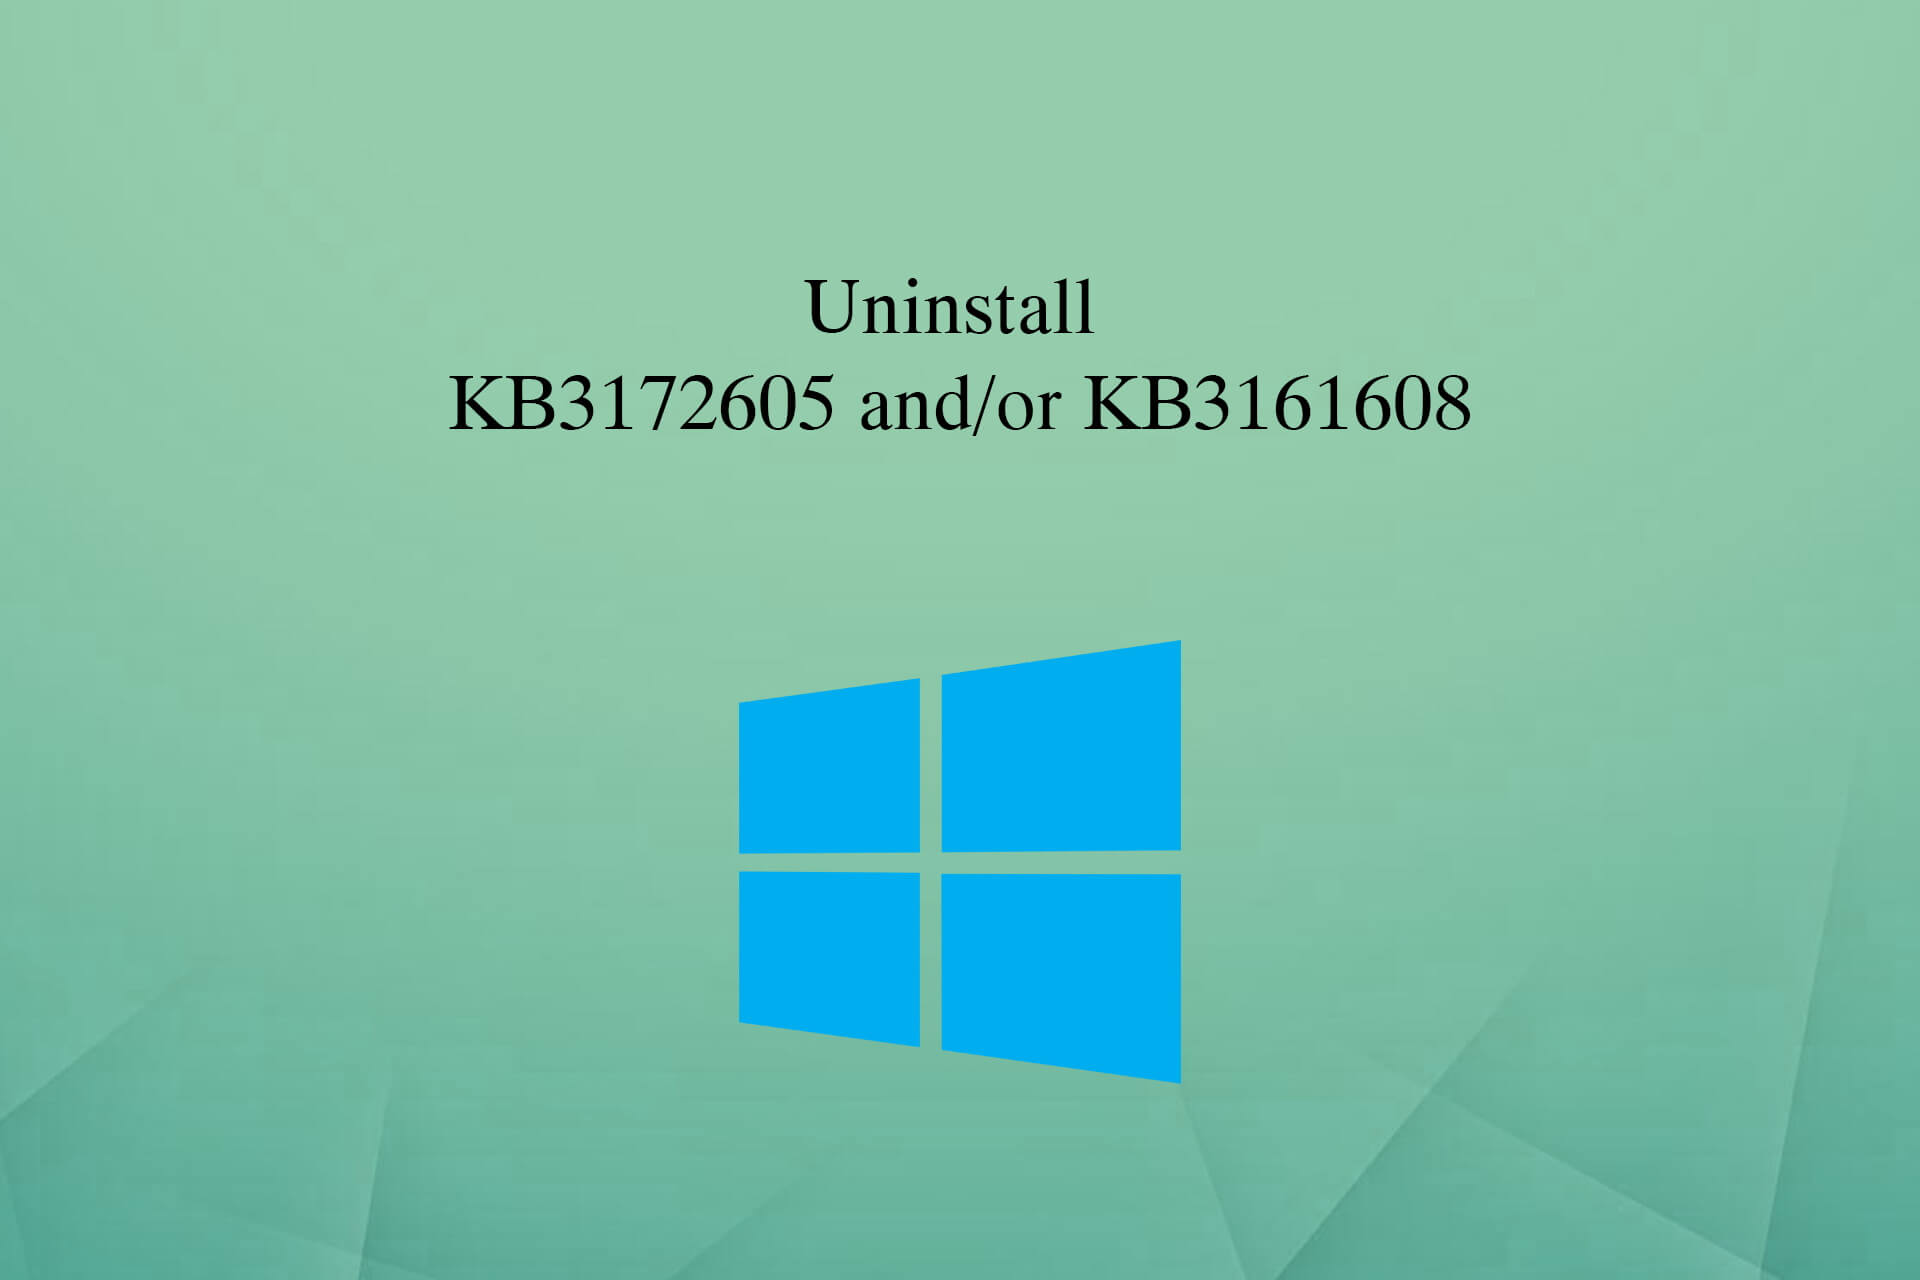 KB3172605/KB3161608 error